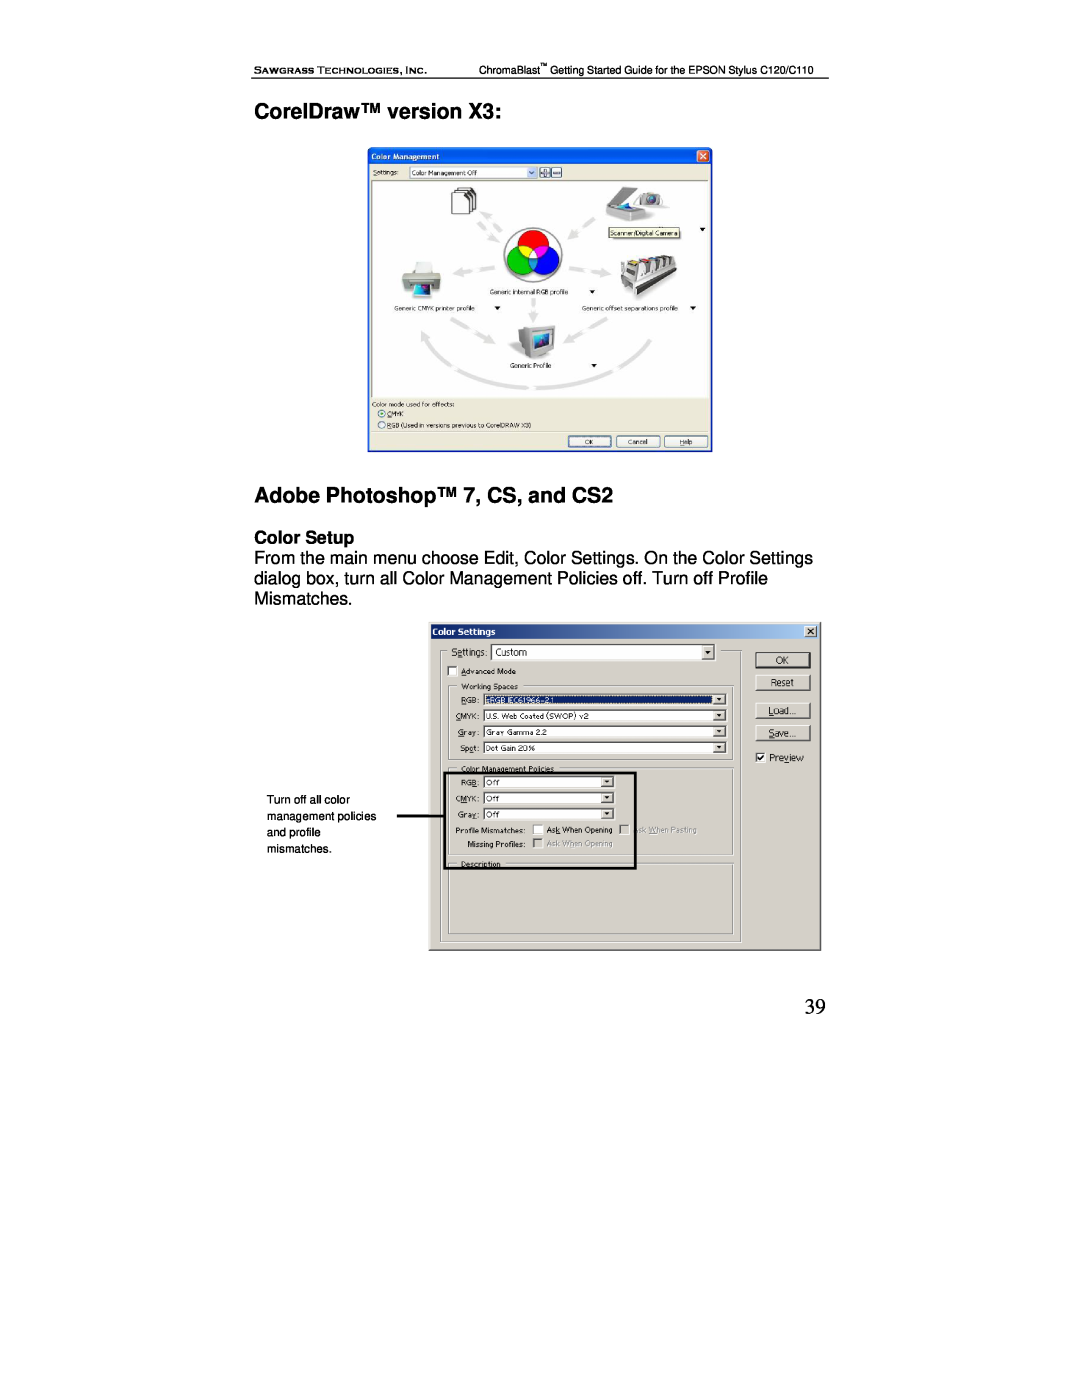 Epson C120, C110 manual CorelDraw version Adobe Photoshop 7, CS, and CS2, Color Setup 